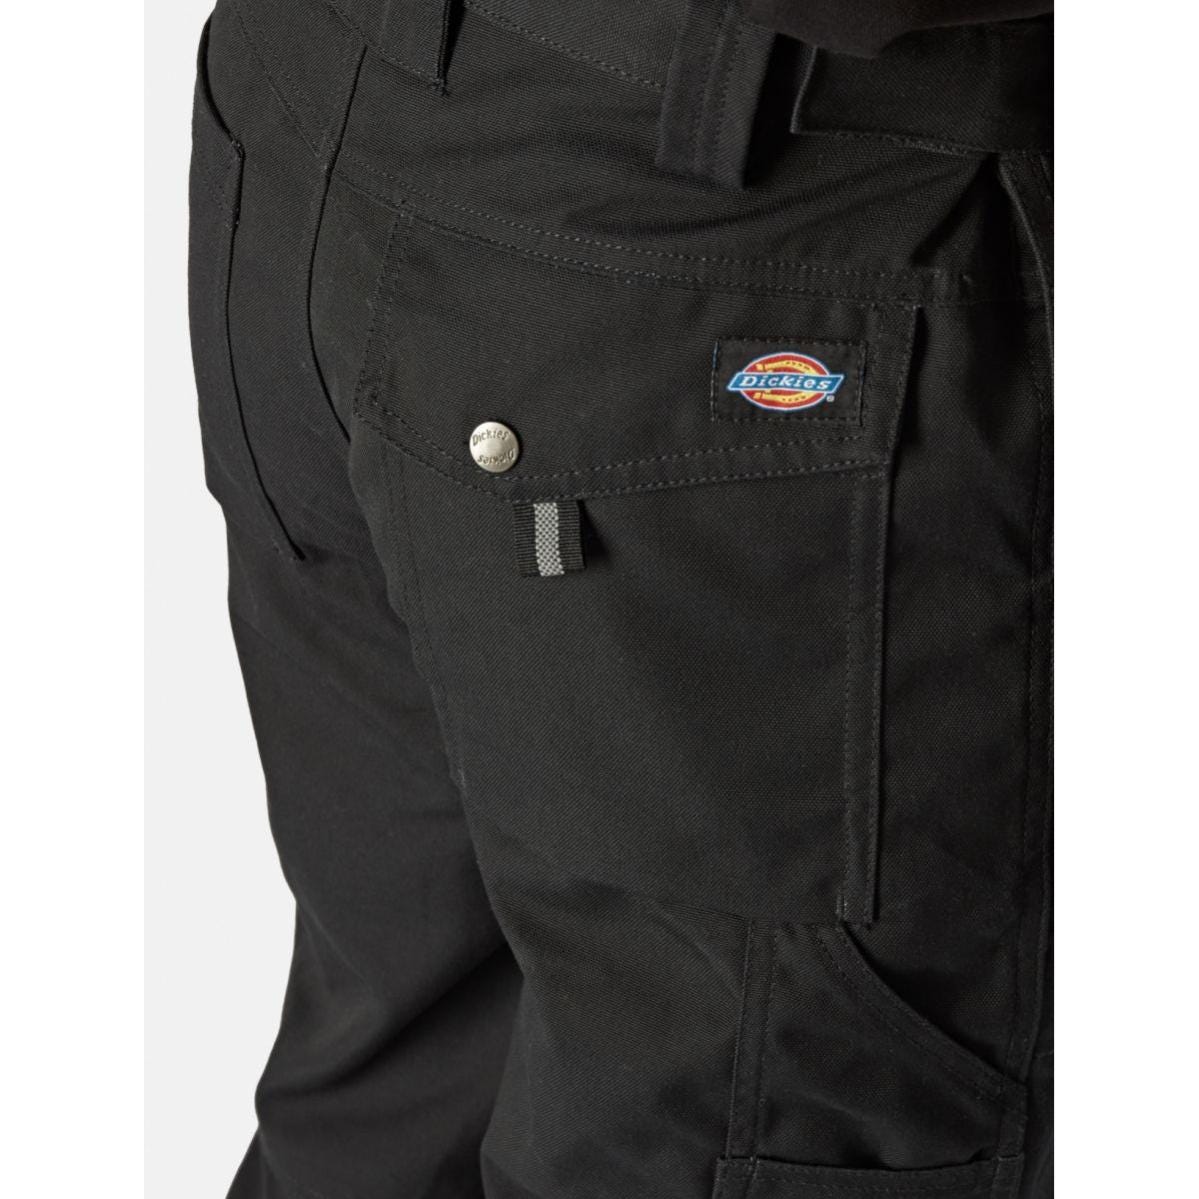 Pantalon Eisenhower multi-poches Noir - Dickies - Taille 48 3